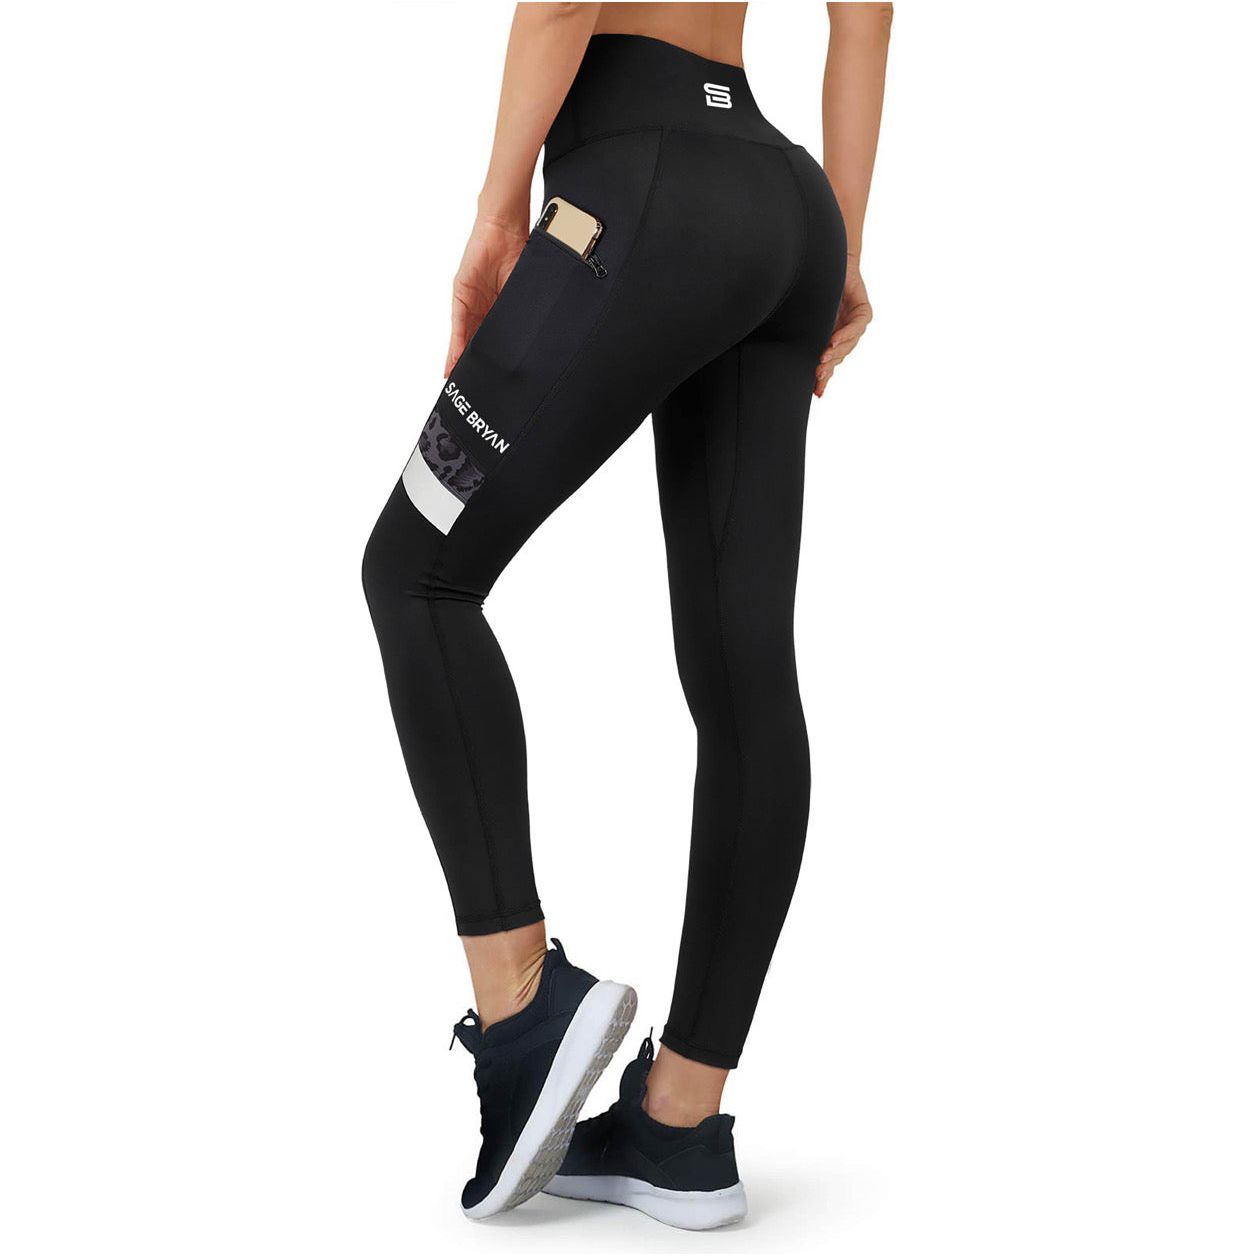 Women's high quality mid waist yoga leggings with zipper pockets.